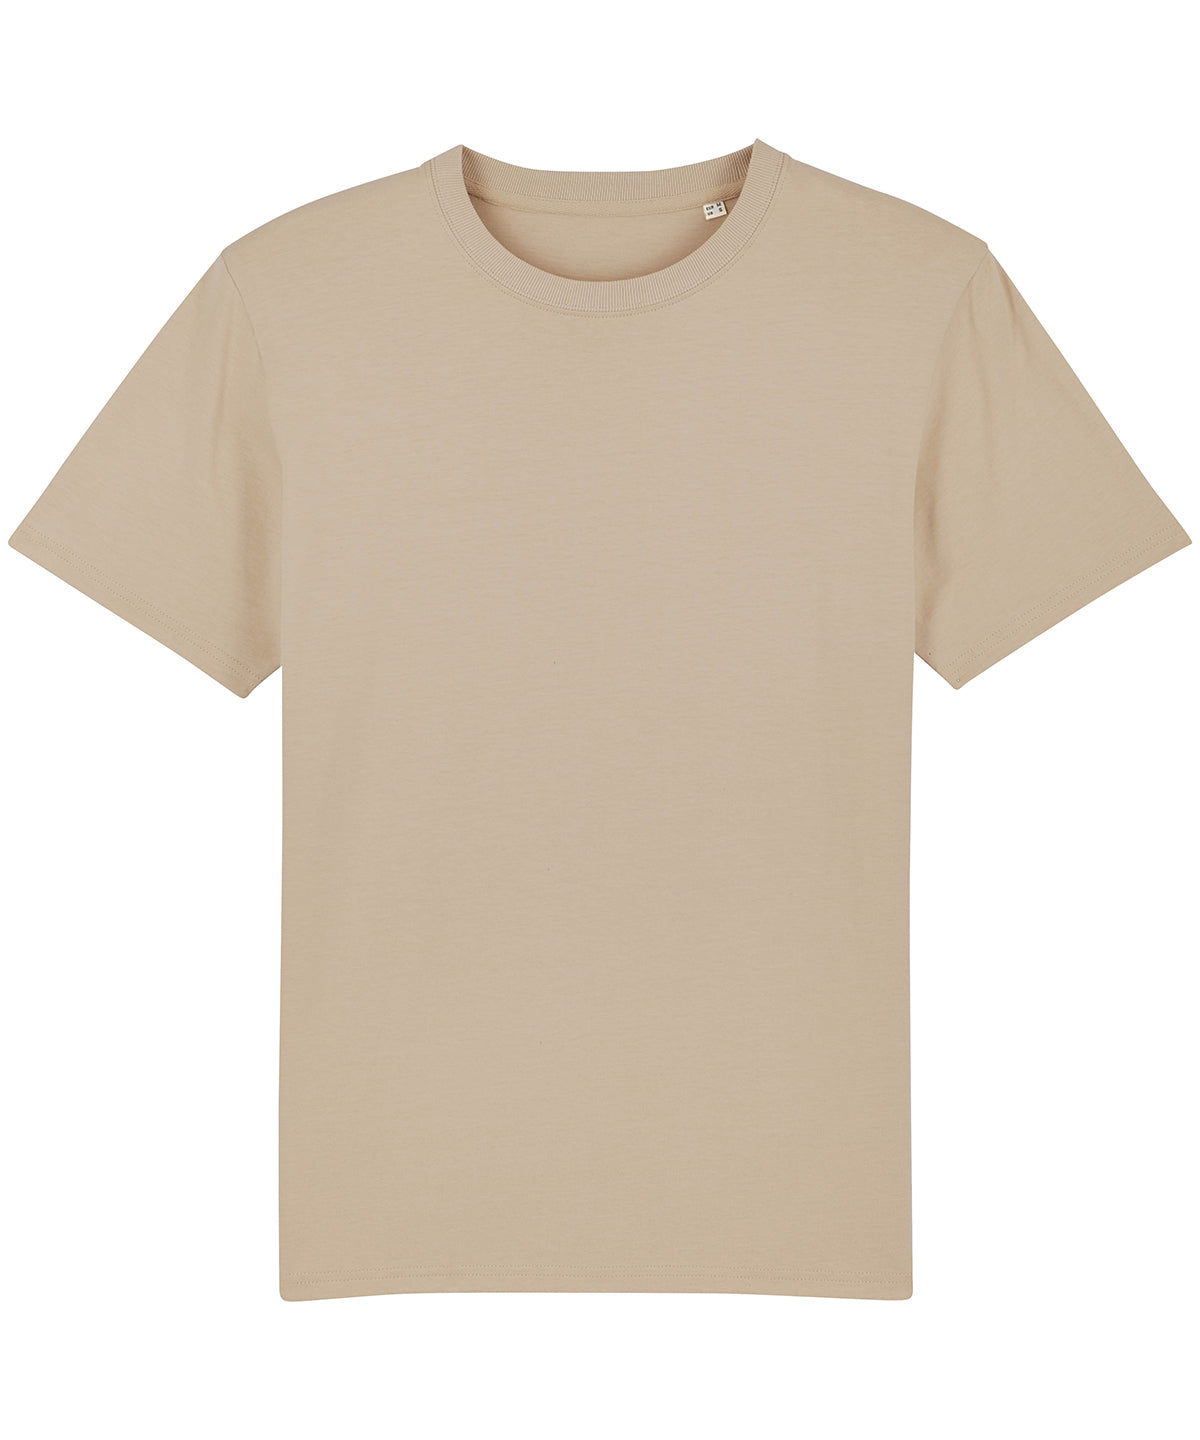 Sparker, unisex heavy t-shirt (STTM559)